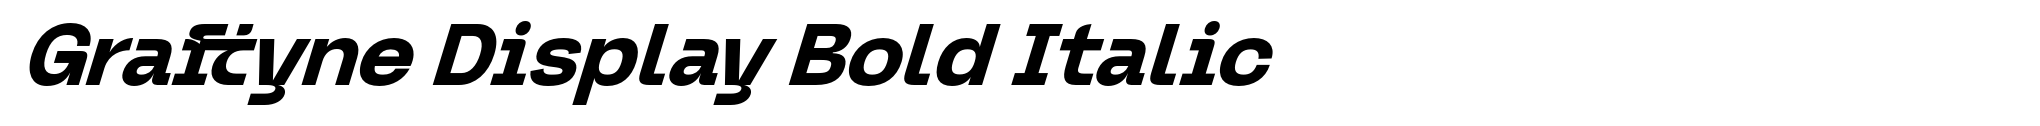 Graftyne Display Bold Italic image